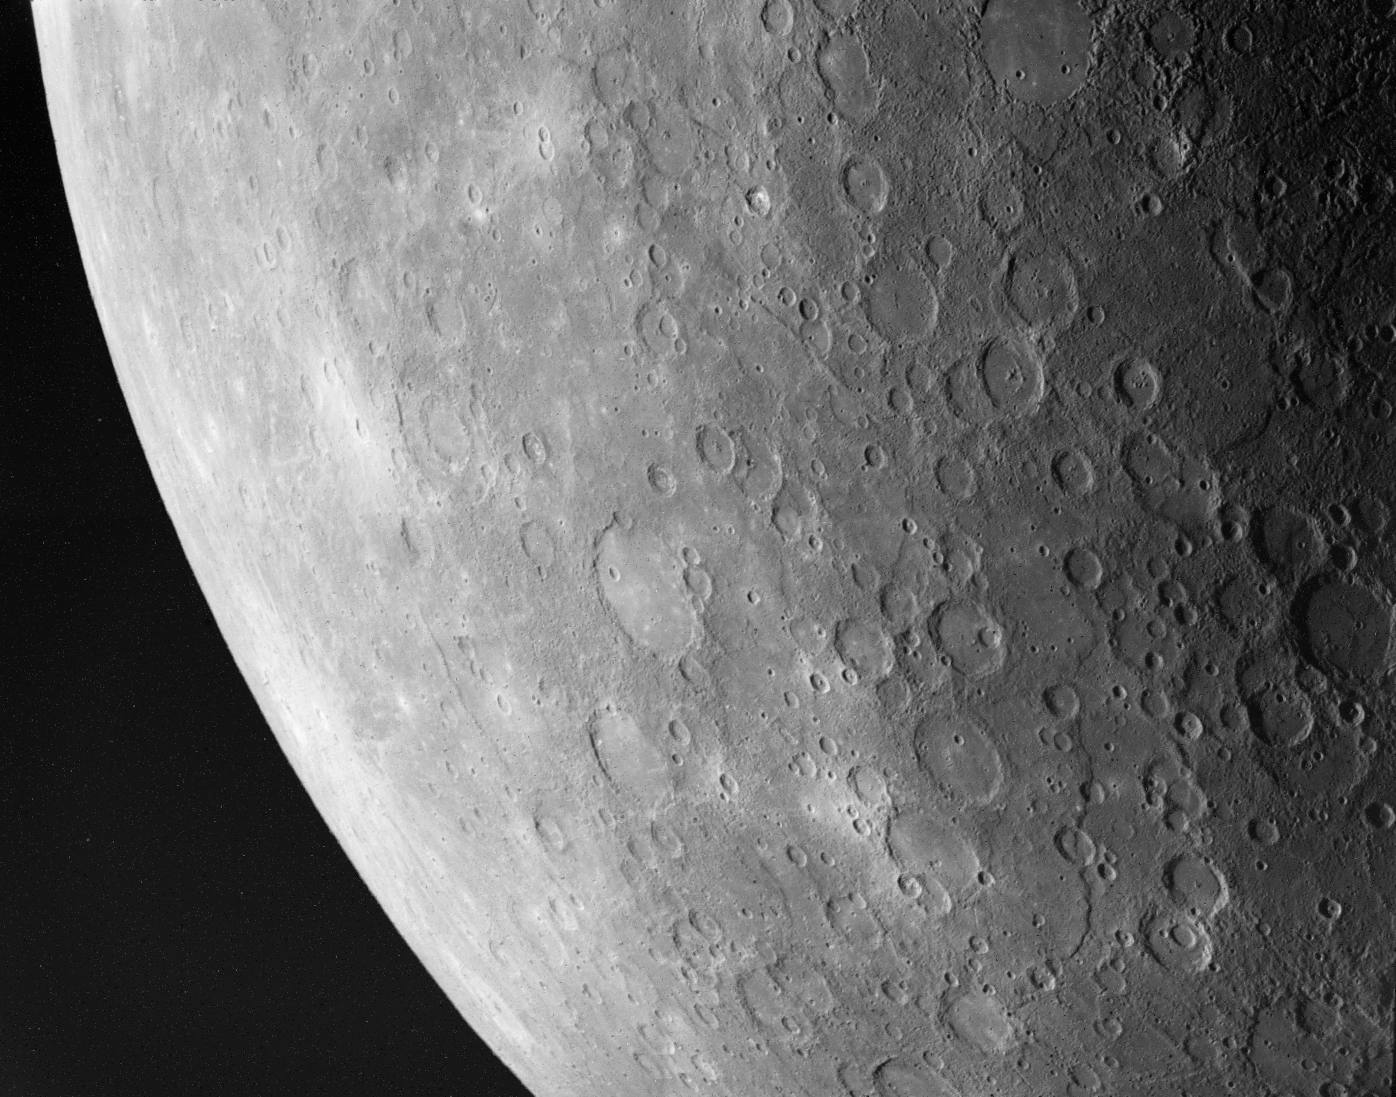 Спутники больше луны. Маринер-10 и Меркурий. Поверхность Меркурия Маринер-10. Снимки планеты Меркурий.